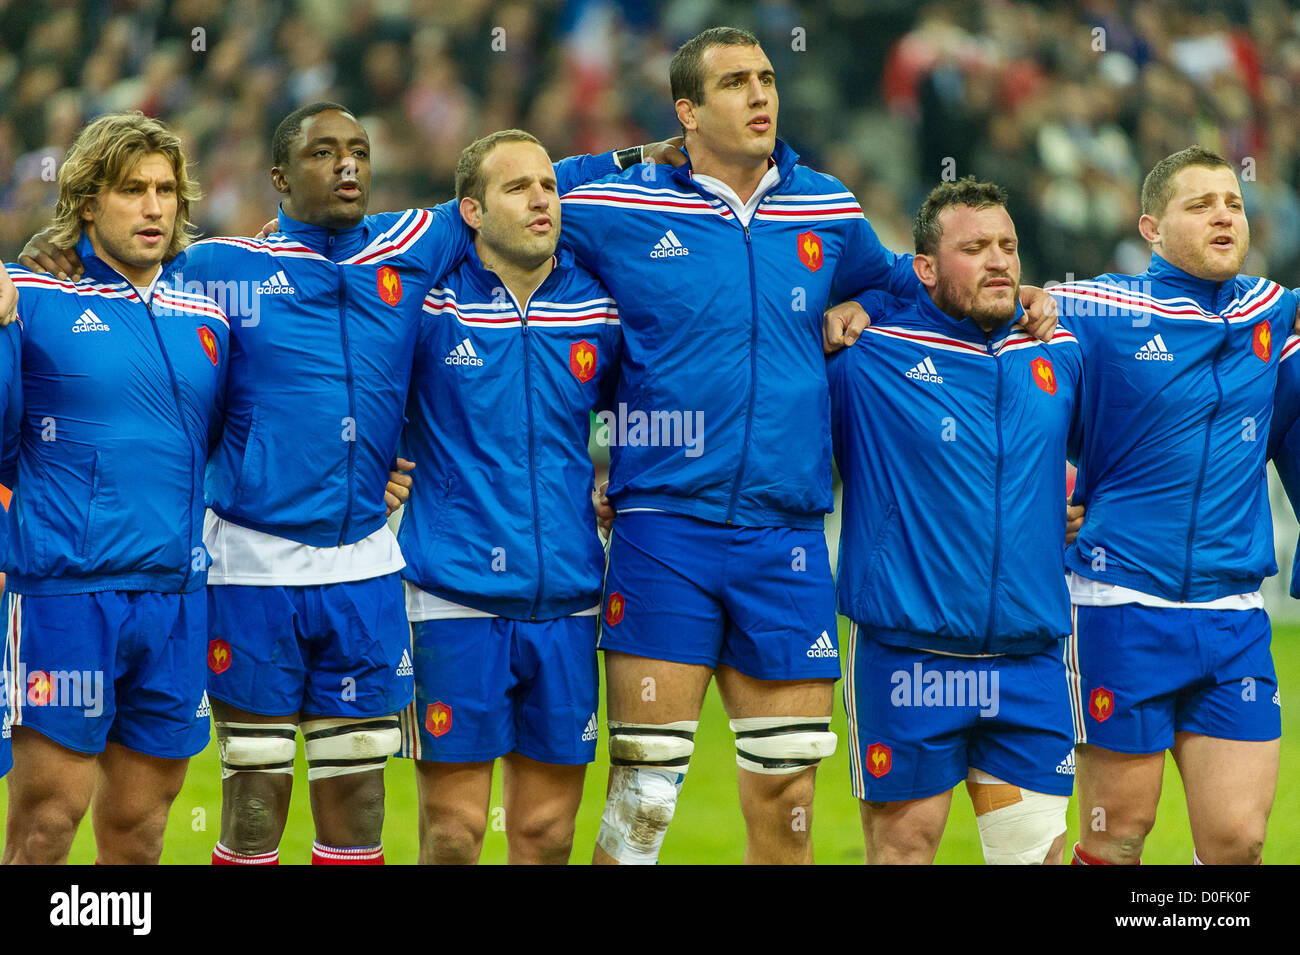 2012-11-24. Saint Denis (France). Rugby test match France (22) vs Samoa (14). French team during national anthemn. Photo Frédéric Augendre Stock Photo